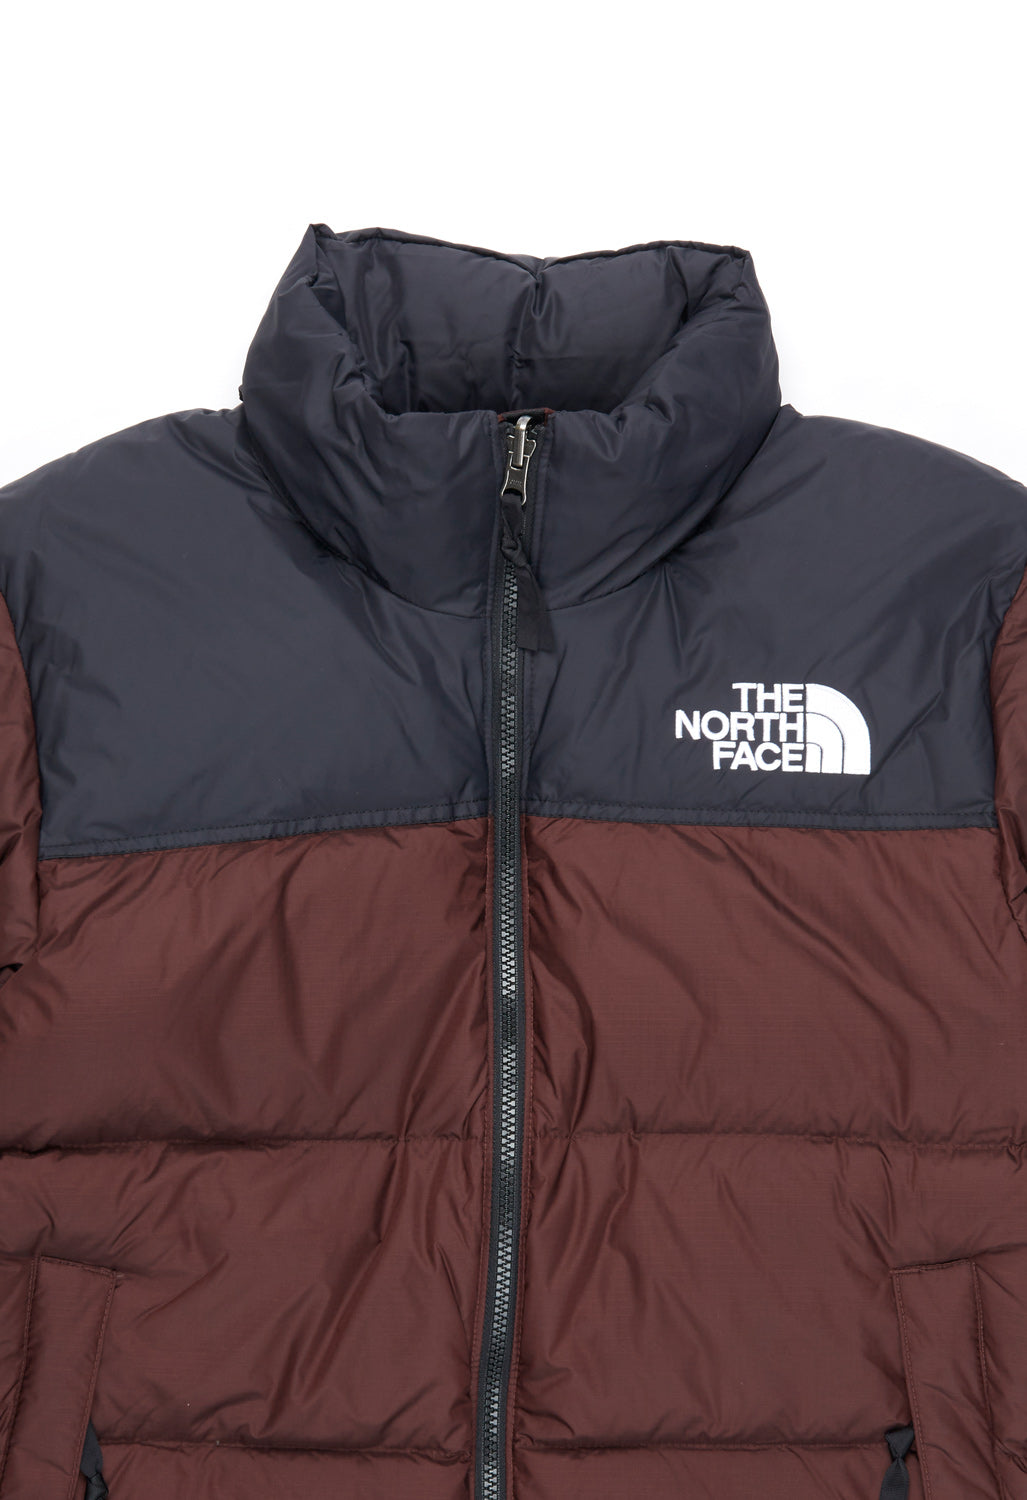 The North Face 1996 Retro Nuptse Women's Jacket - Coal Brown / TNF Black